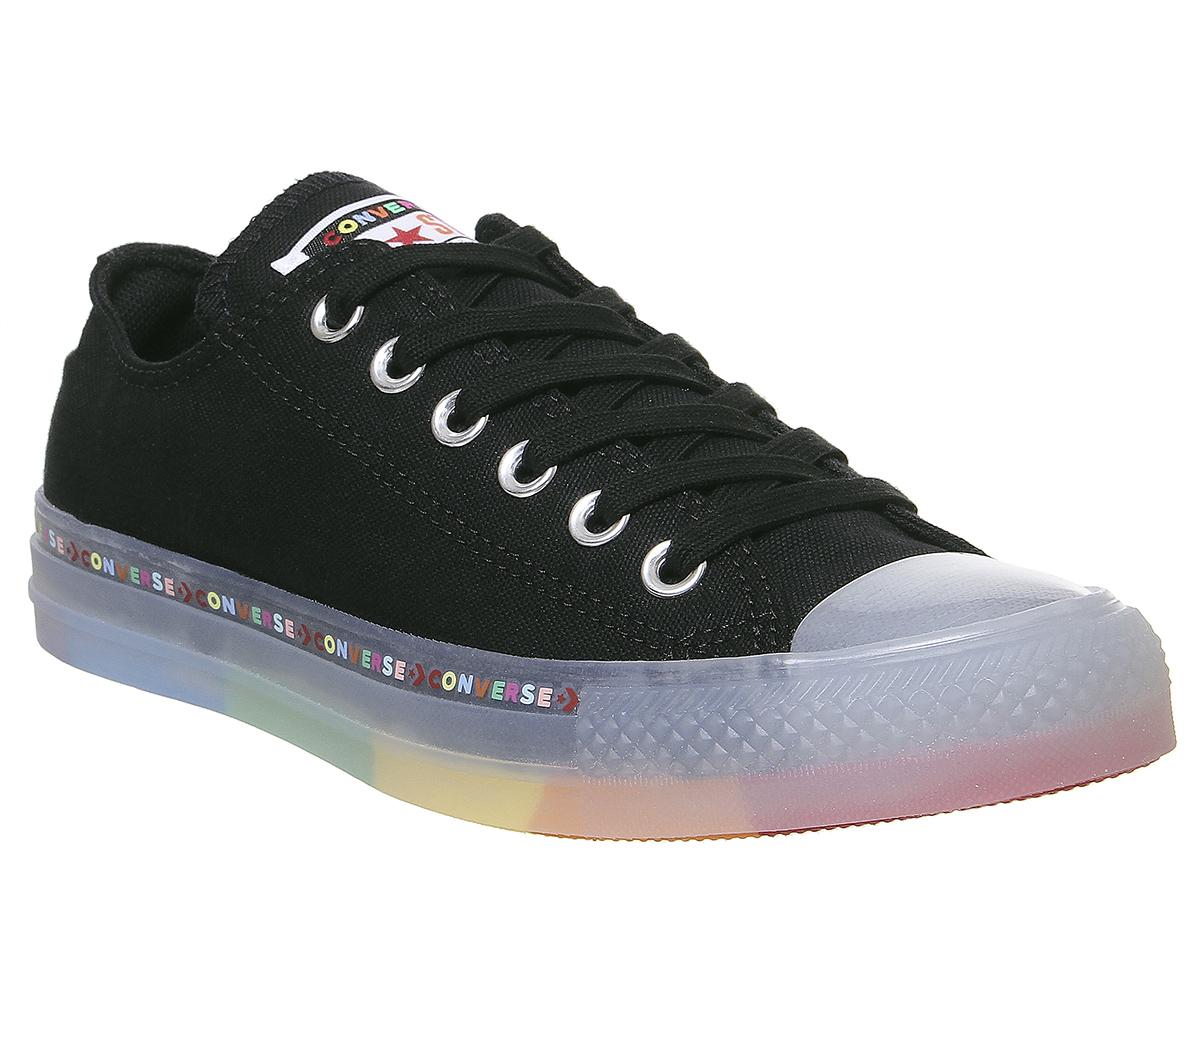 converse shoes rainbow